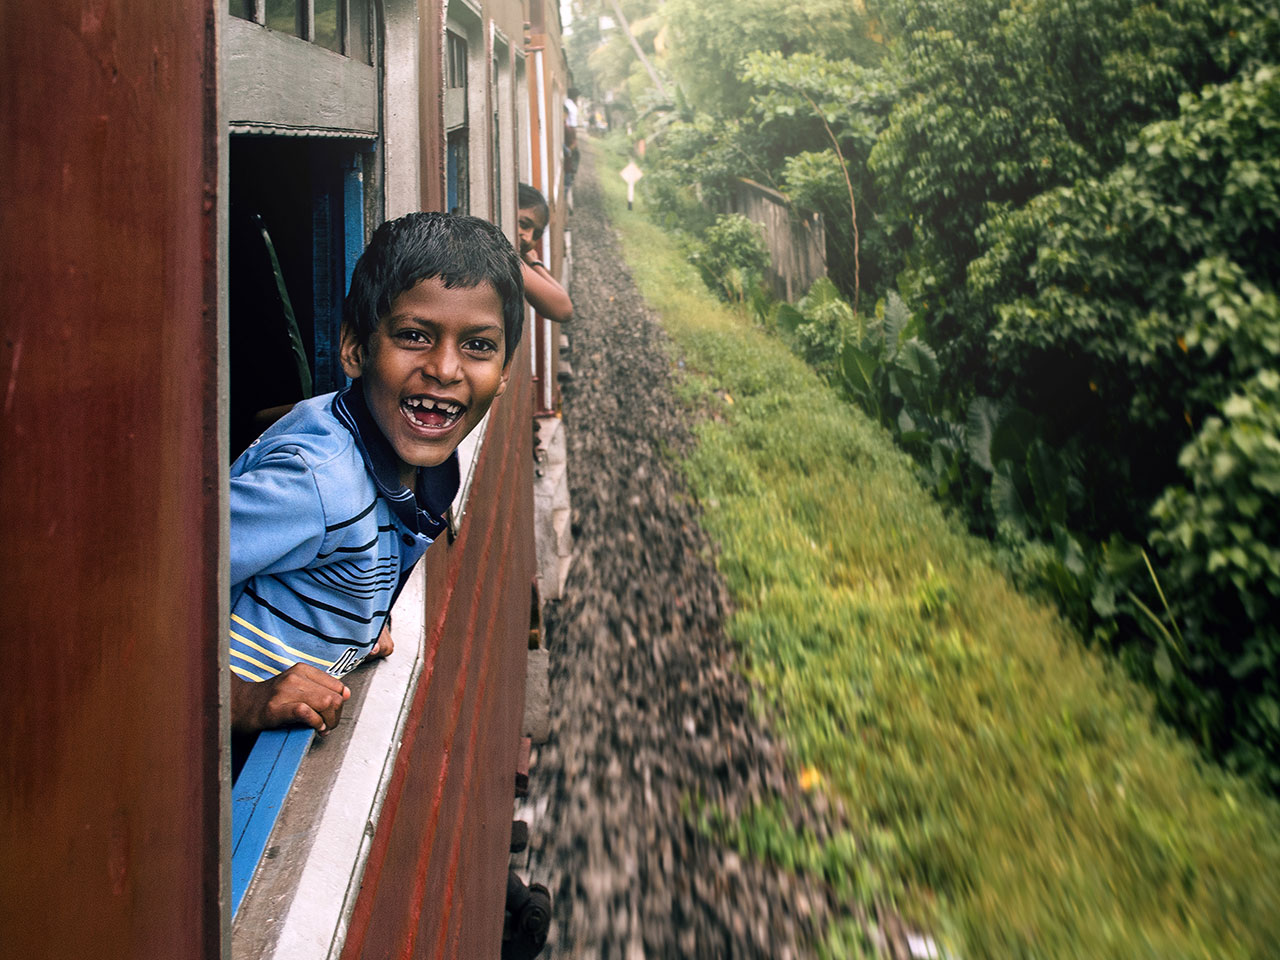 Sri Lanka Train Boy Portrait